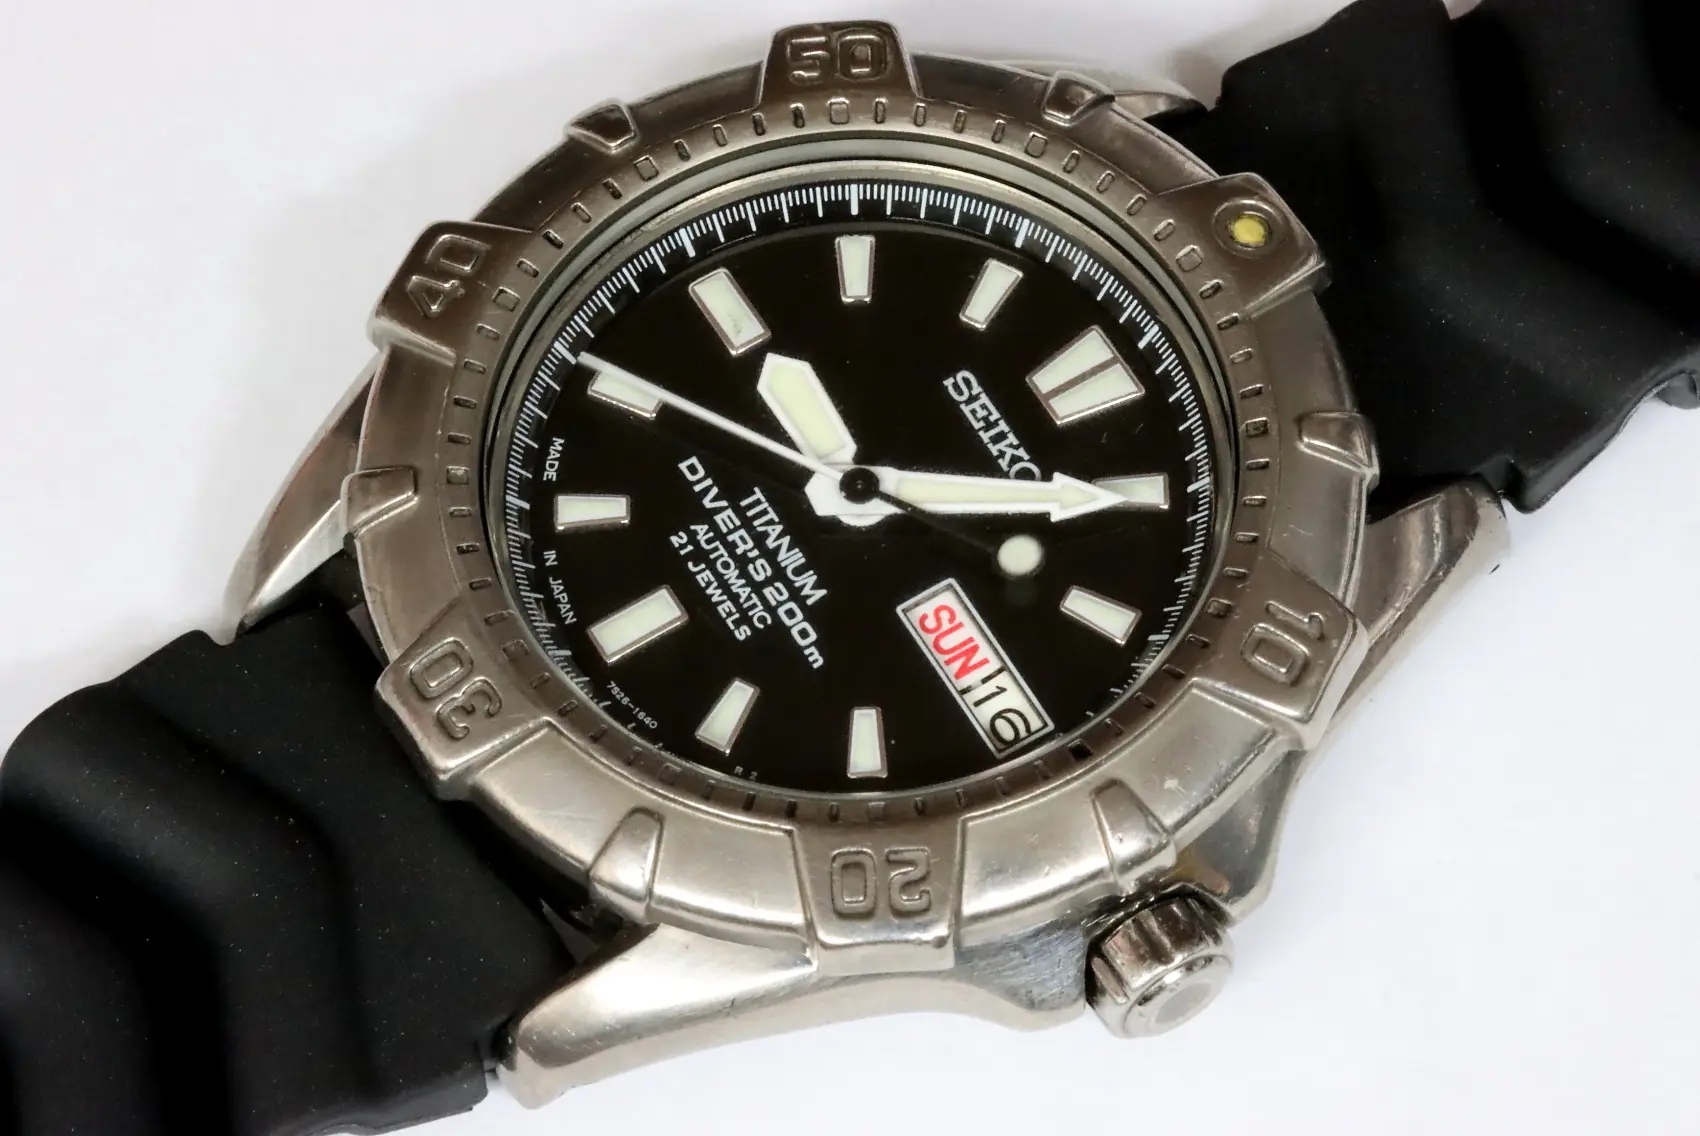 Seiko titanium 7S26-0150 SKX421 automatic diver's watch